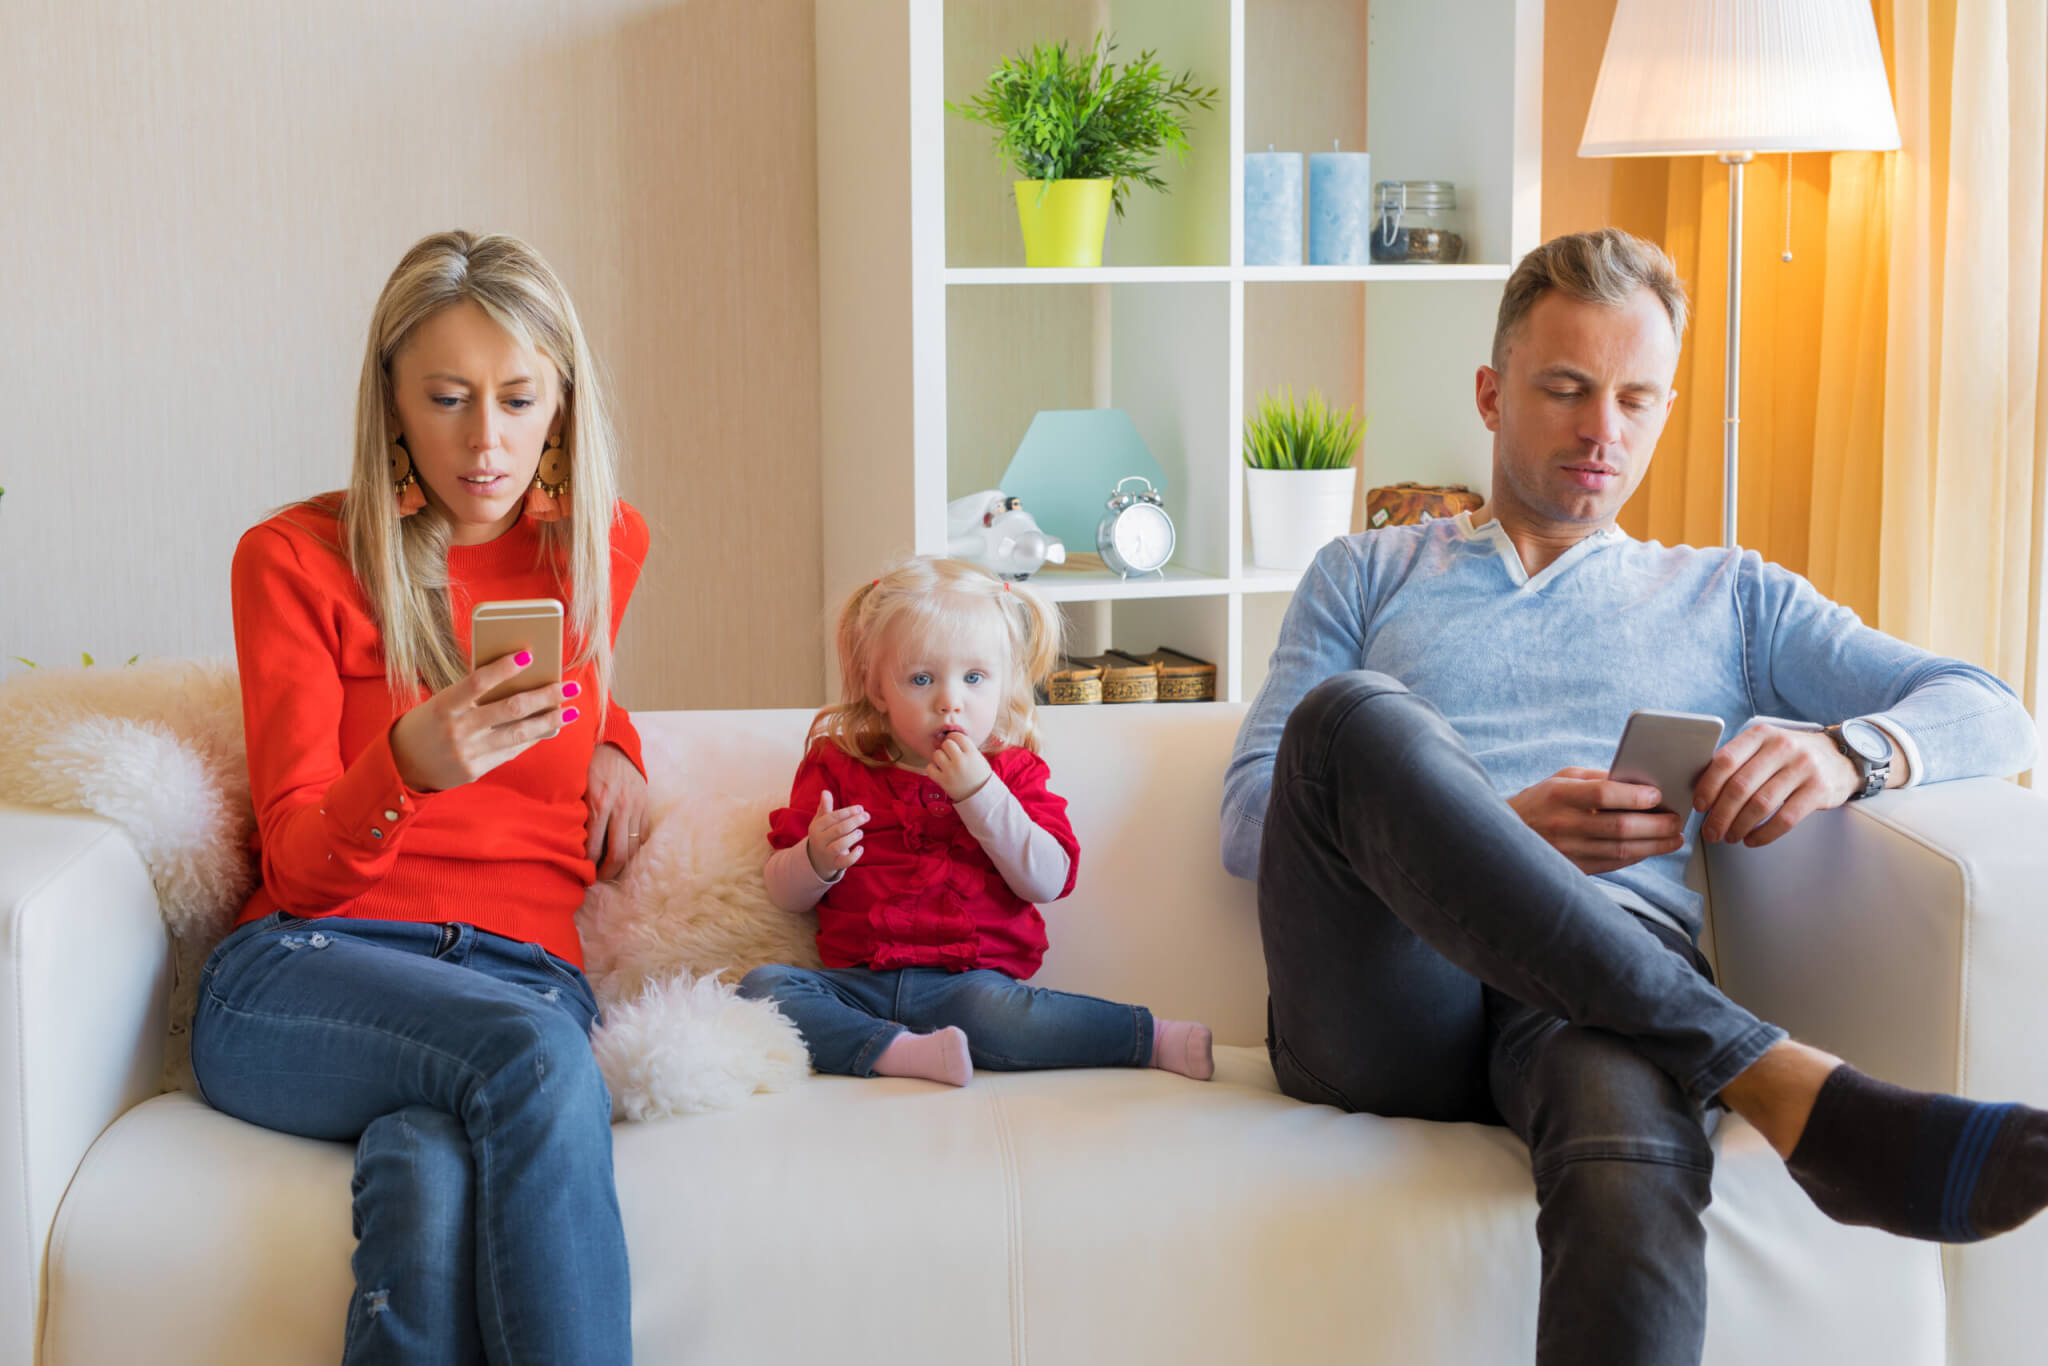 Parents on smartphones ignoring their child